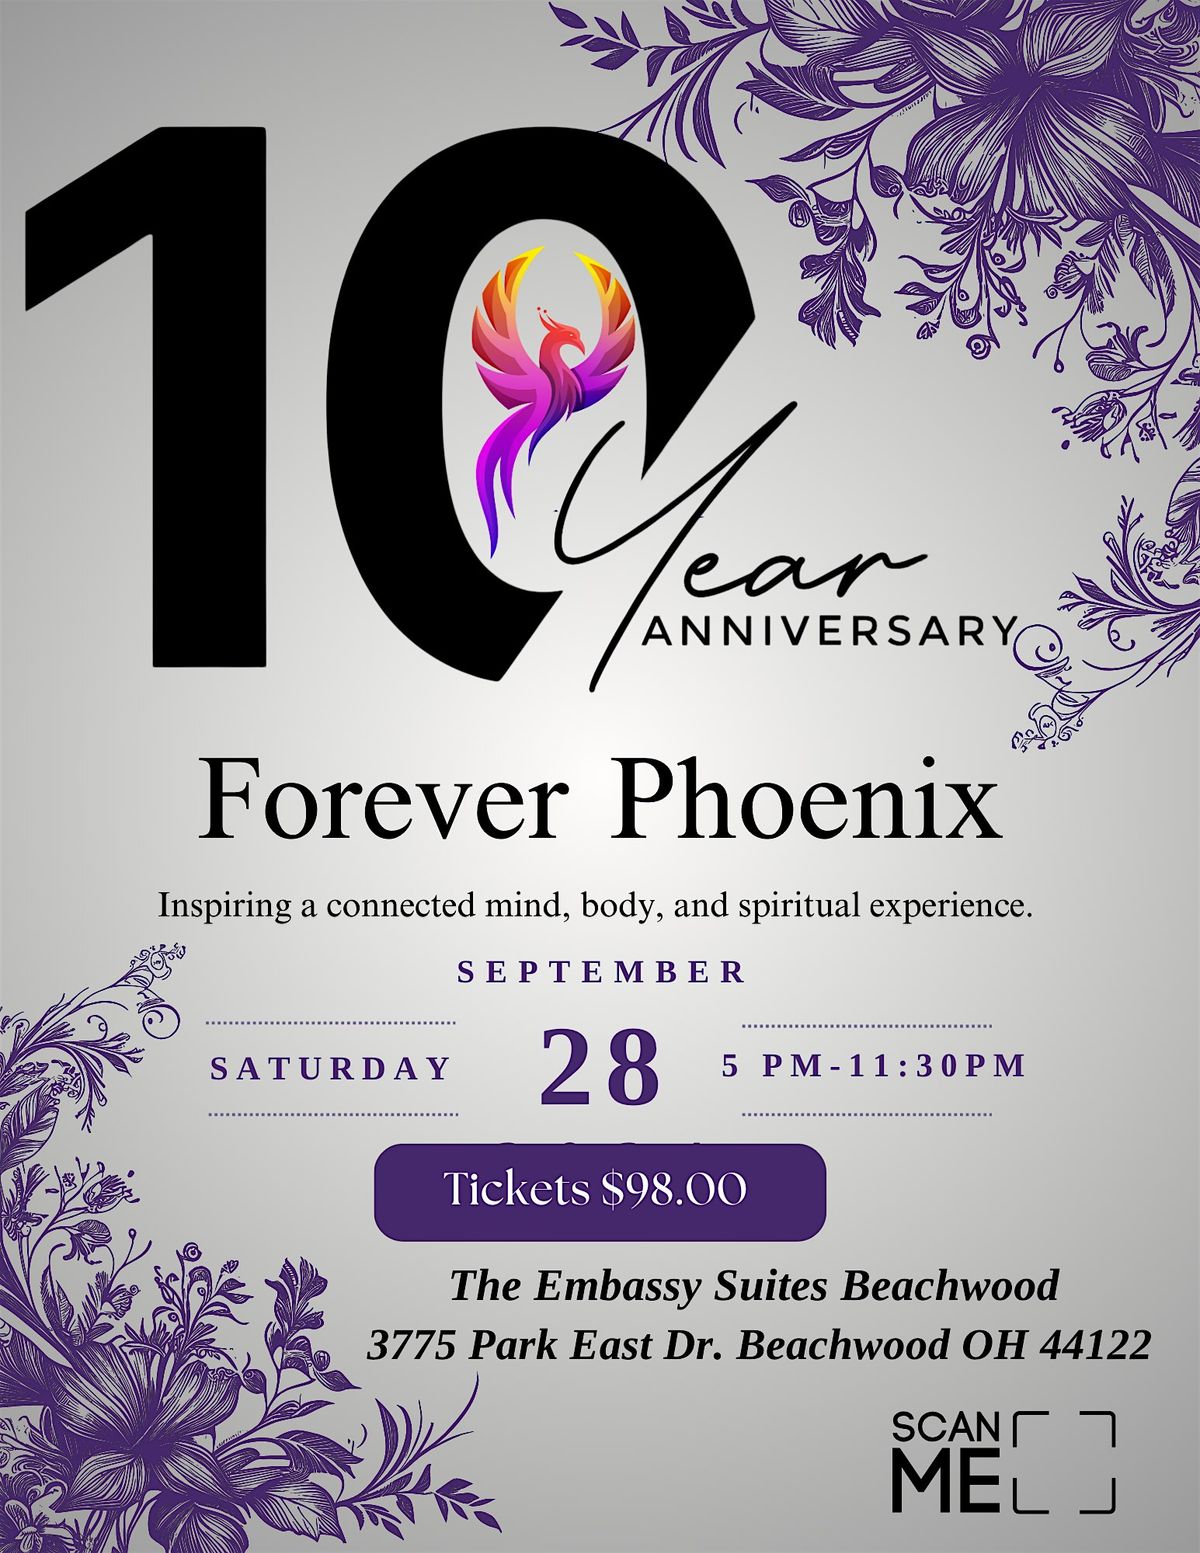 Forever Phoenix 10 Year Anniversary Celebration